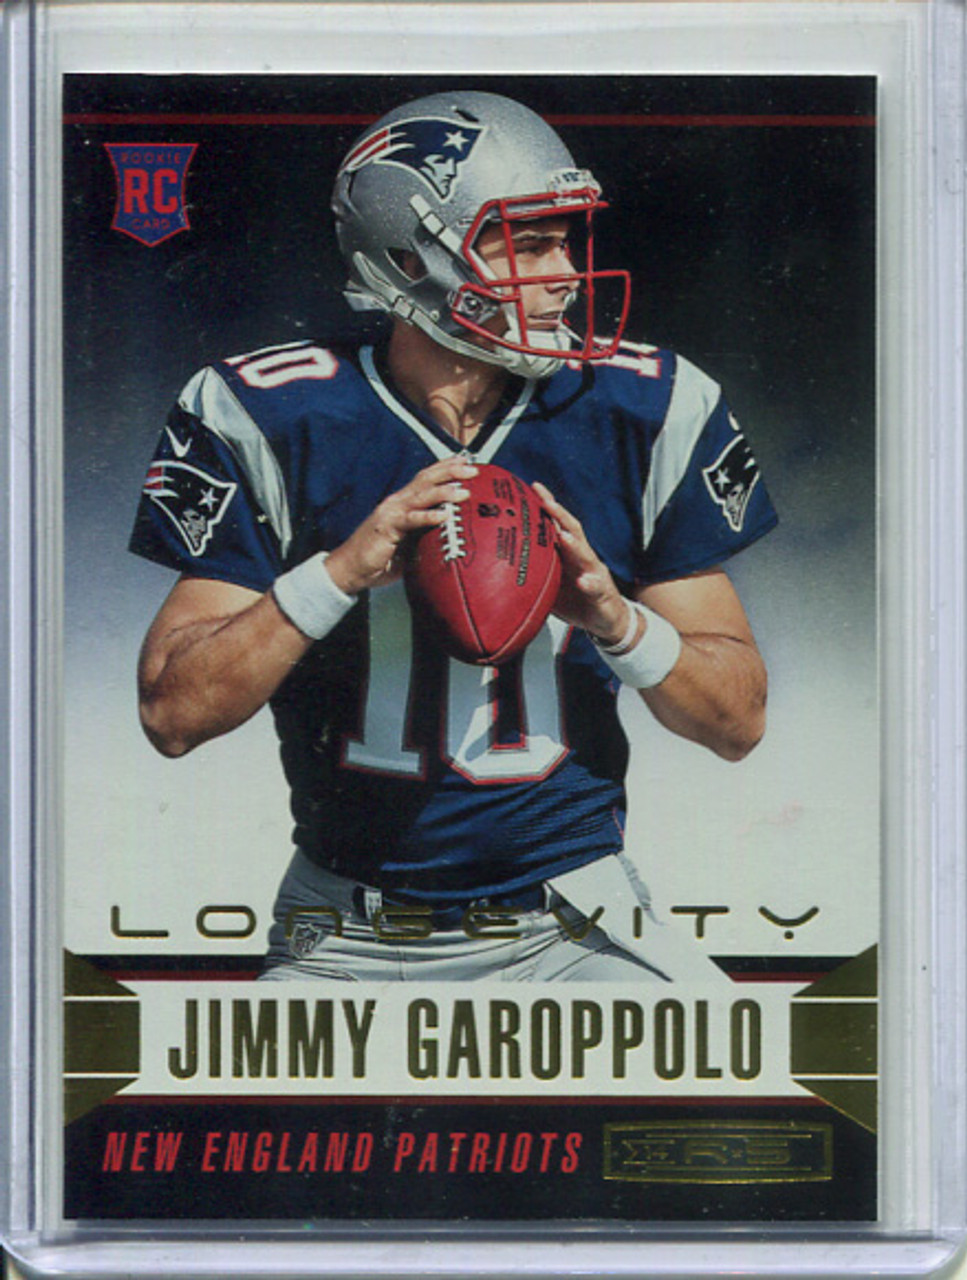 Jimmy Garoppolo 2014 Rookies & Stars #152 Longevity